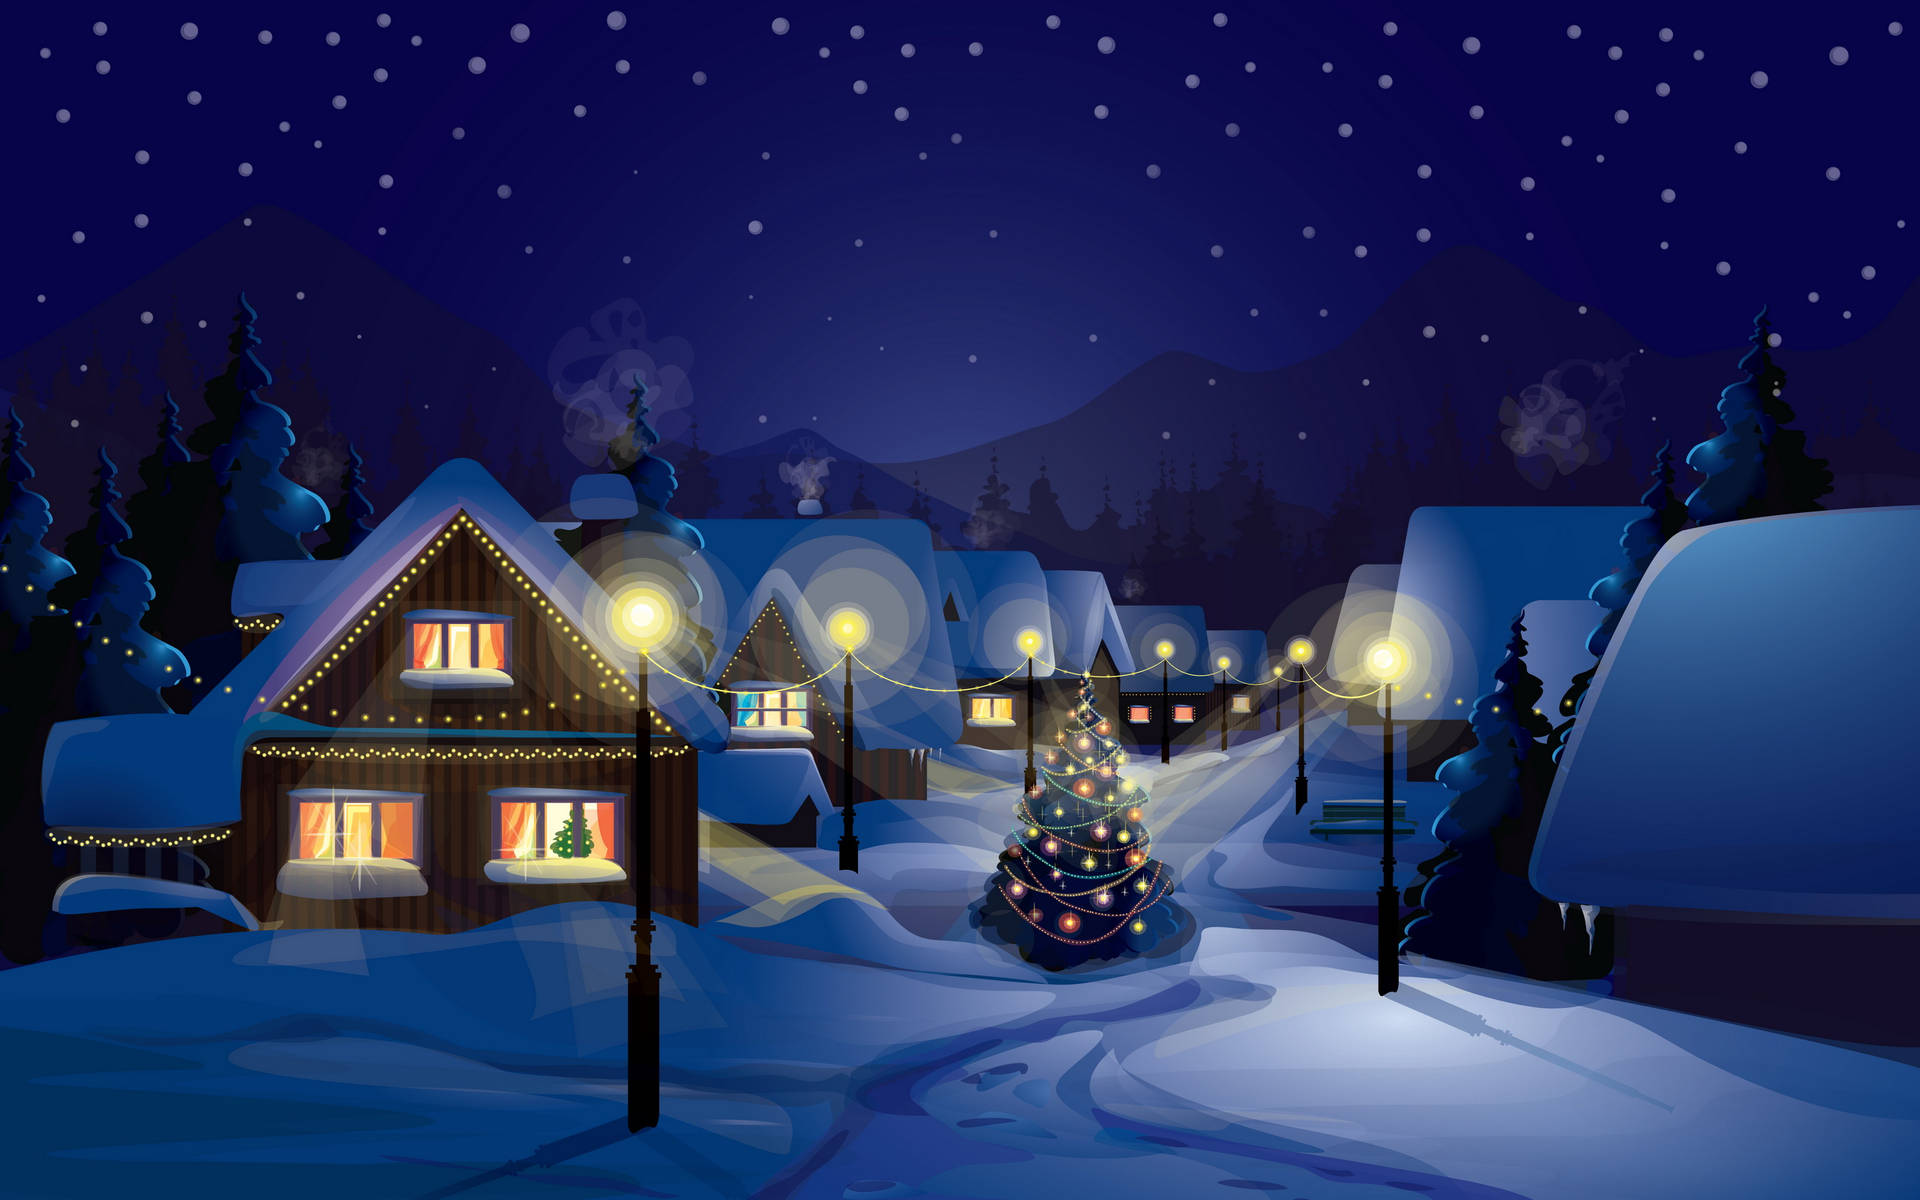 Snowy Village Christmas Holiday Desktop Wallpaper